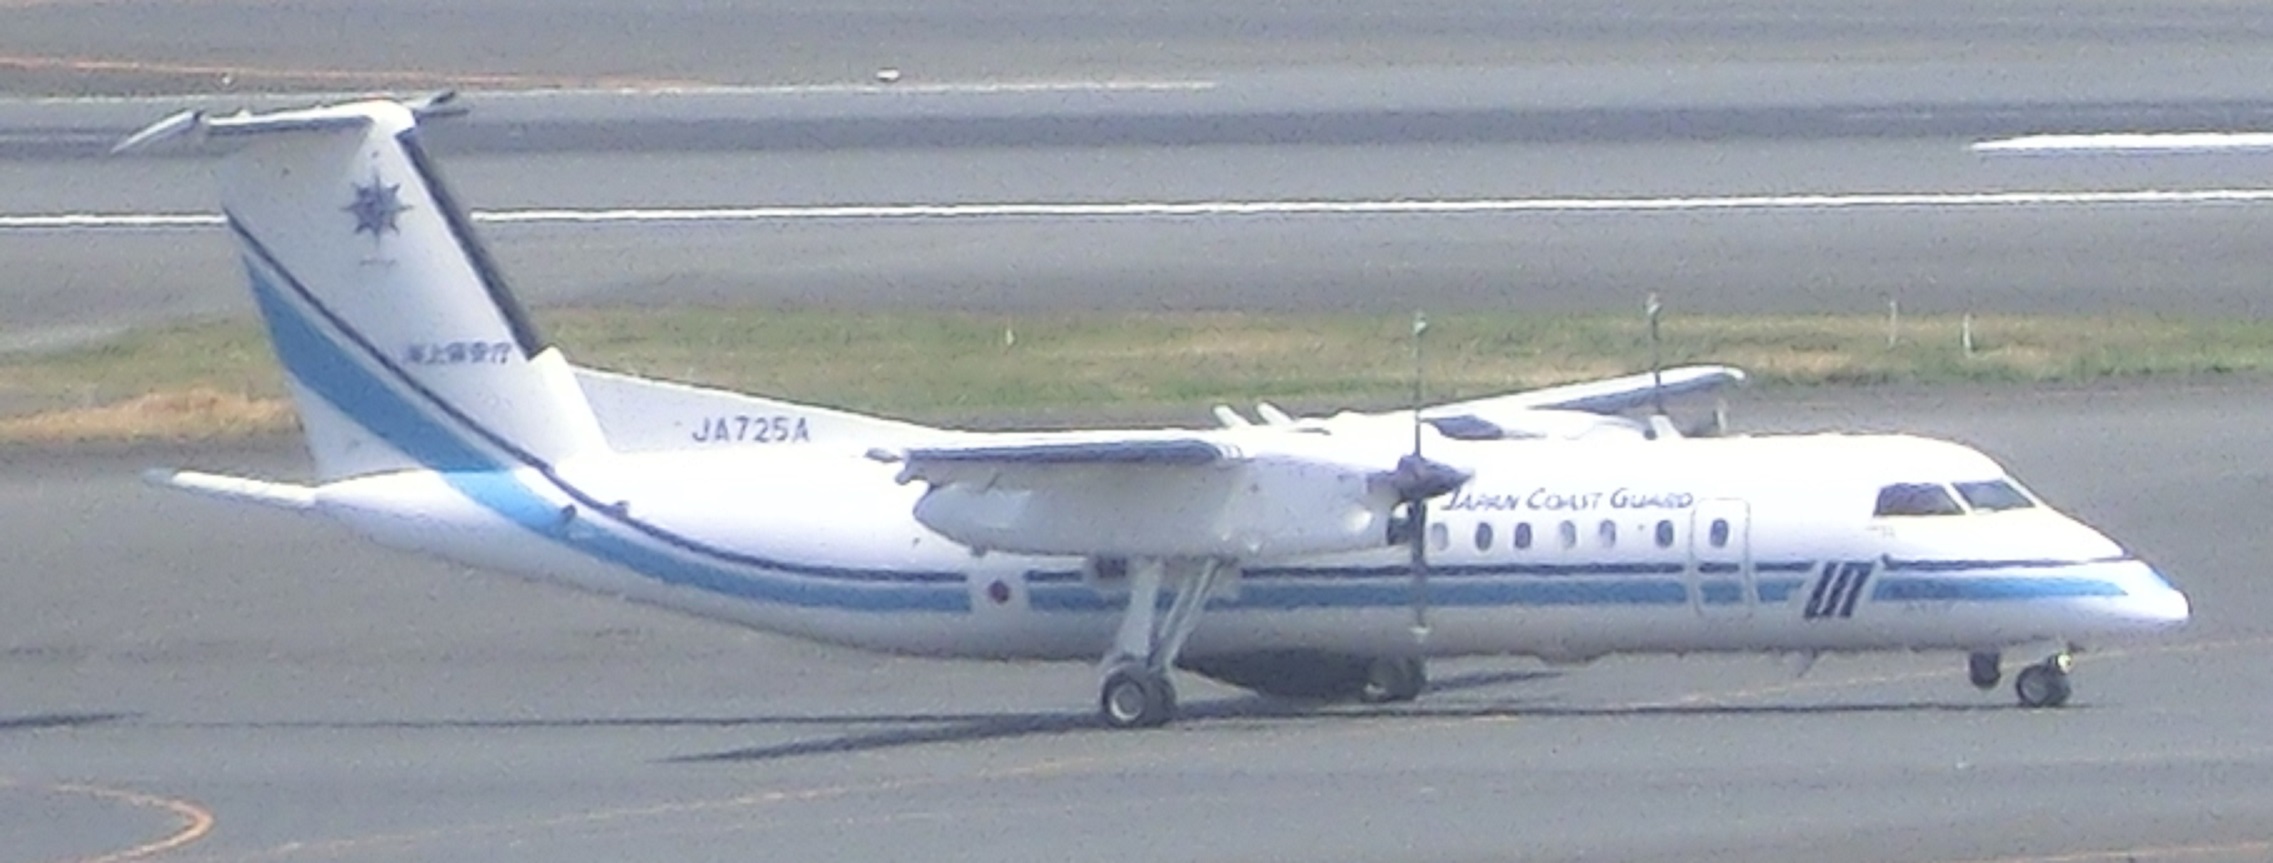 JA725A-2.jpg